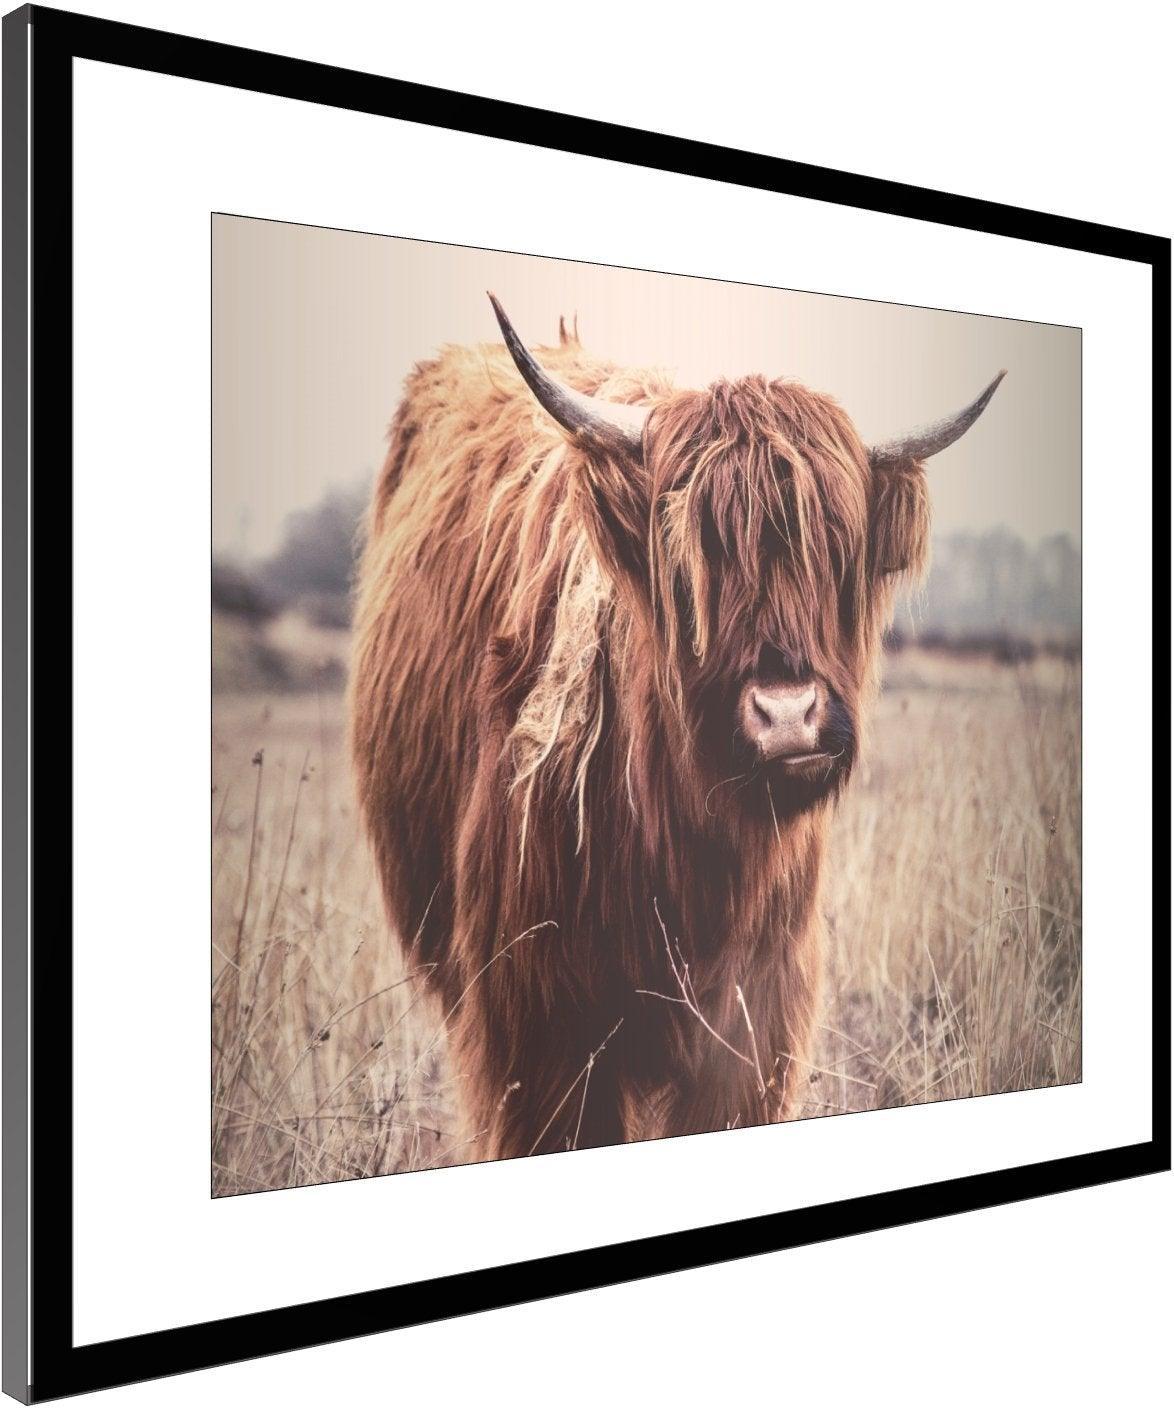 Animal wall art canvas prints or framed art - Modern Memory Design Picture frames - New Jersey Frame Shop Custom Framing